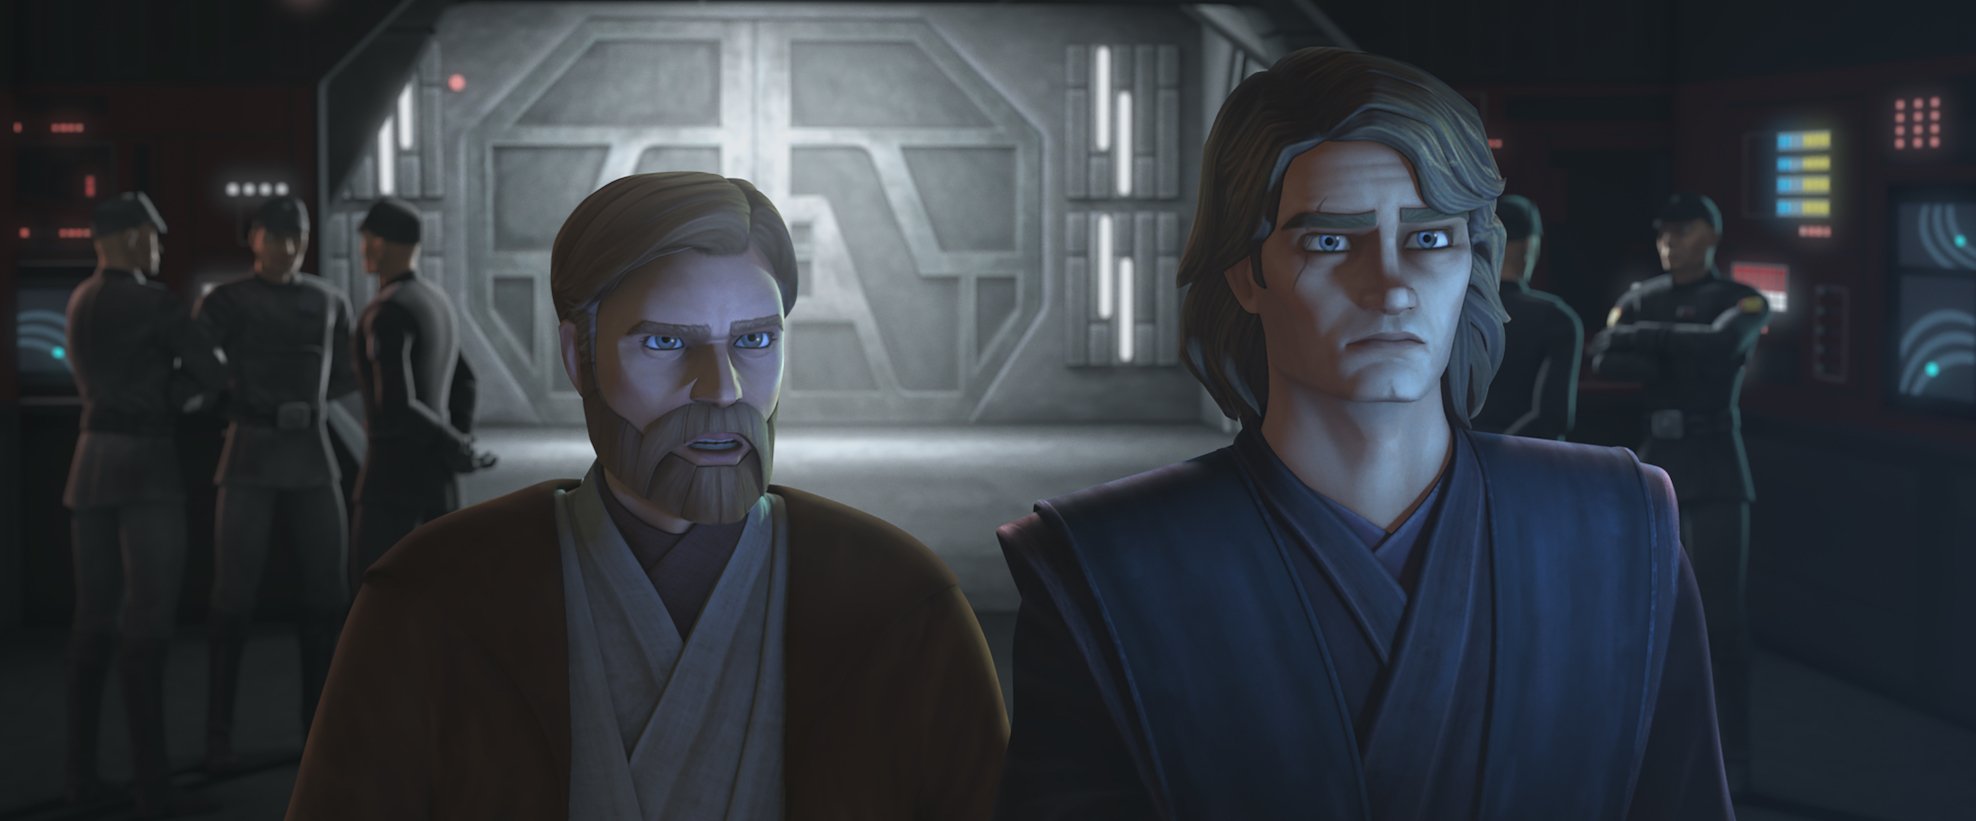 Obi-Wan Kenobi and Anakin Skywalker in 'The Clone Wars' Season 7.